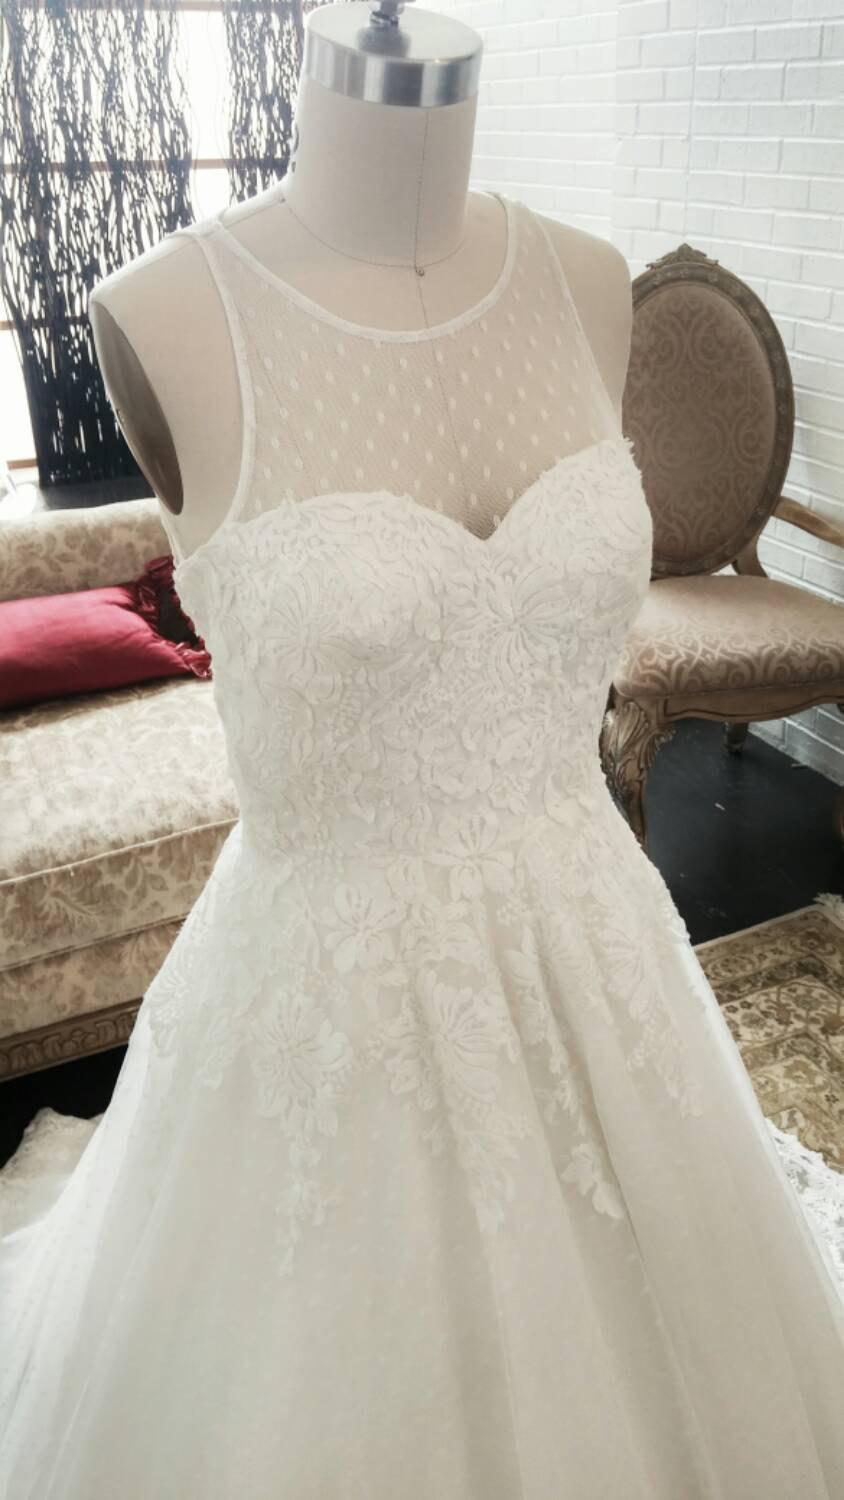 Mariage - Unique Swiss Dot Vintage Wedding dress With Lace Details, A-line Wedding Dress, Lace Wedding Dress, Unique Wedding Dress, Vintage Wedding